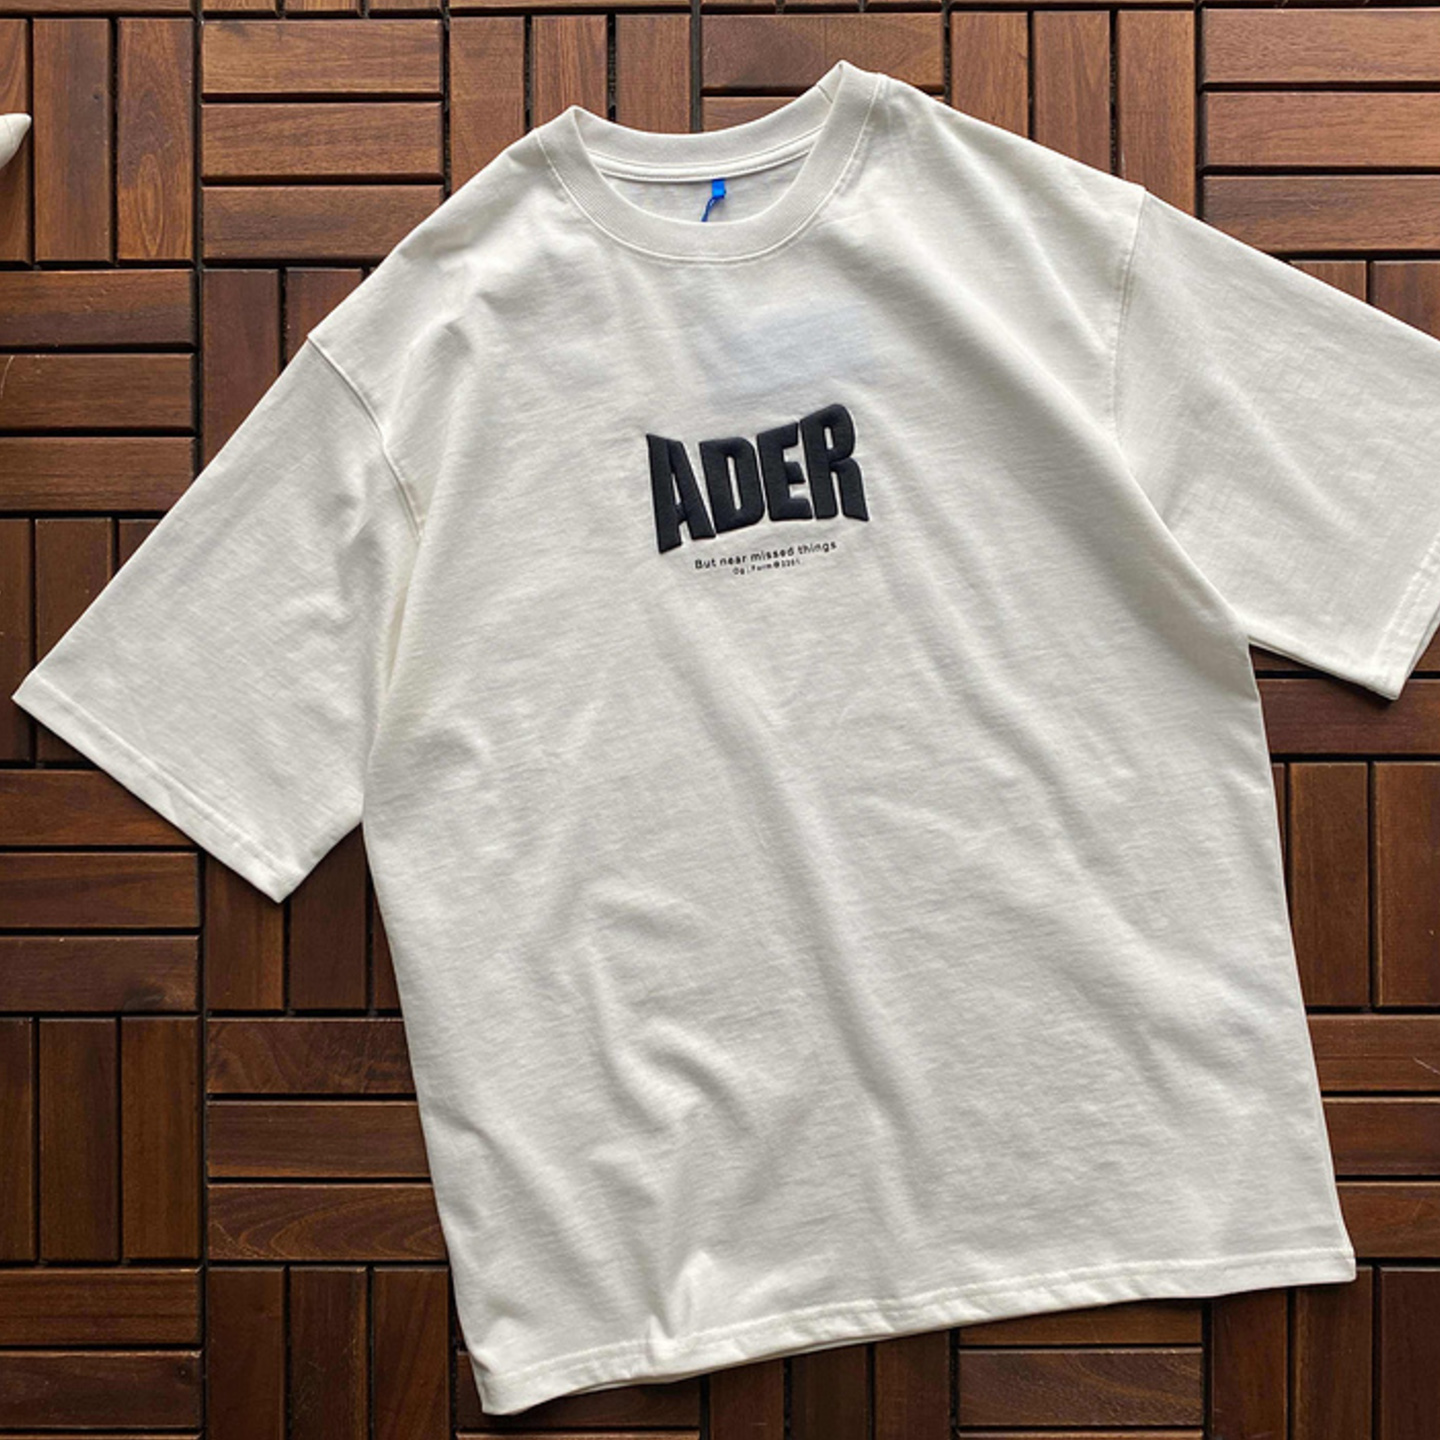 Ader ErrorEmbroidered letter logo T Shirt